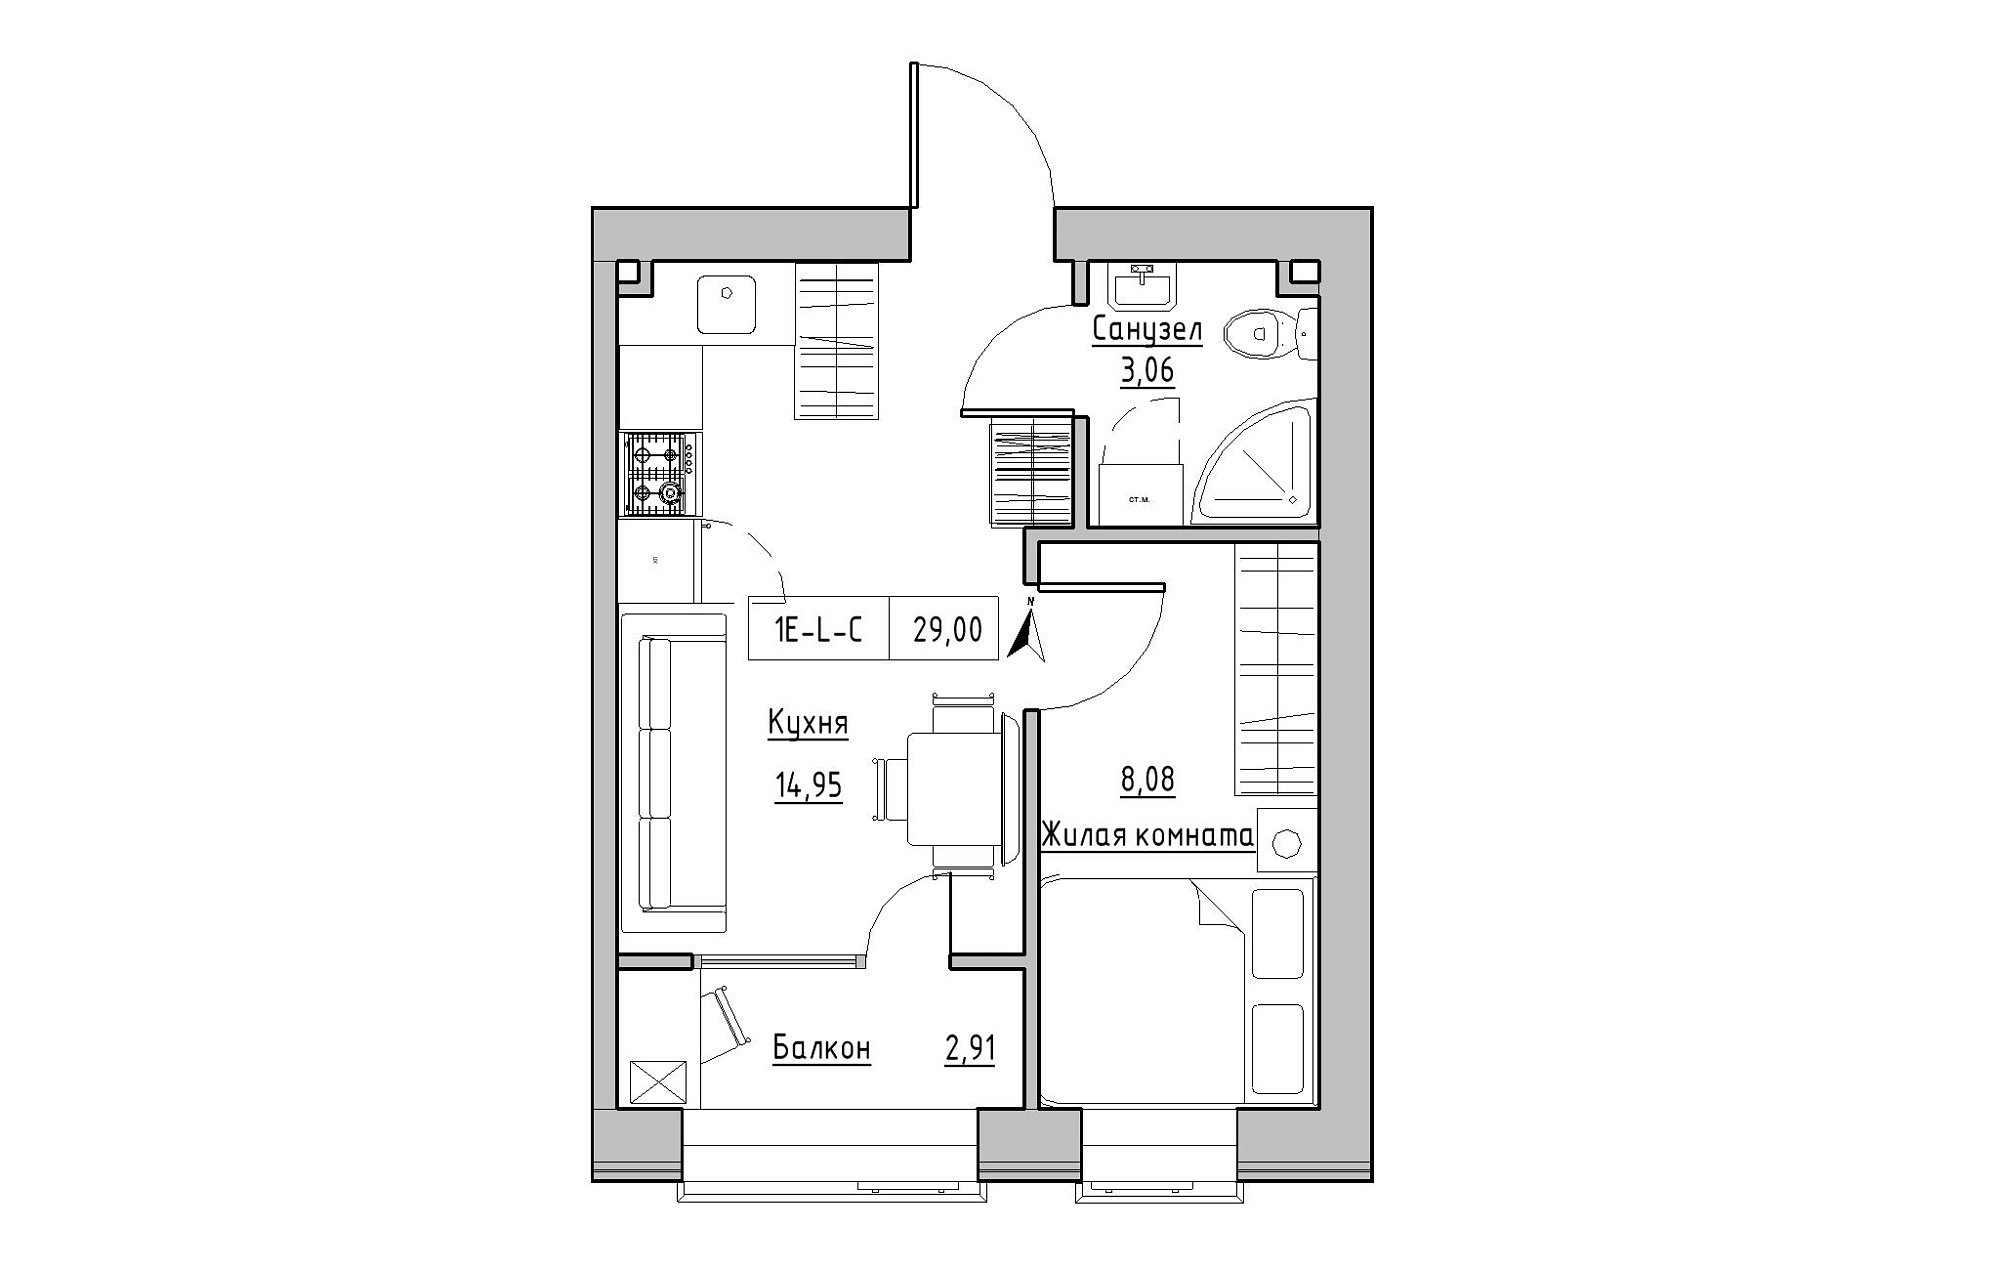 Planning 1-rm flats area 29m2, KS-019-04/0009.